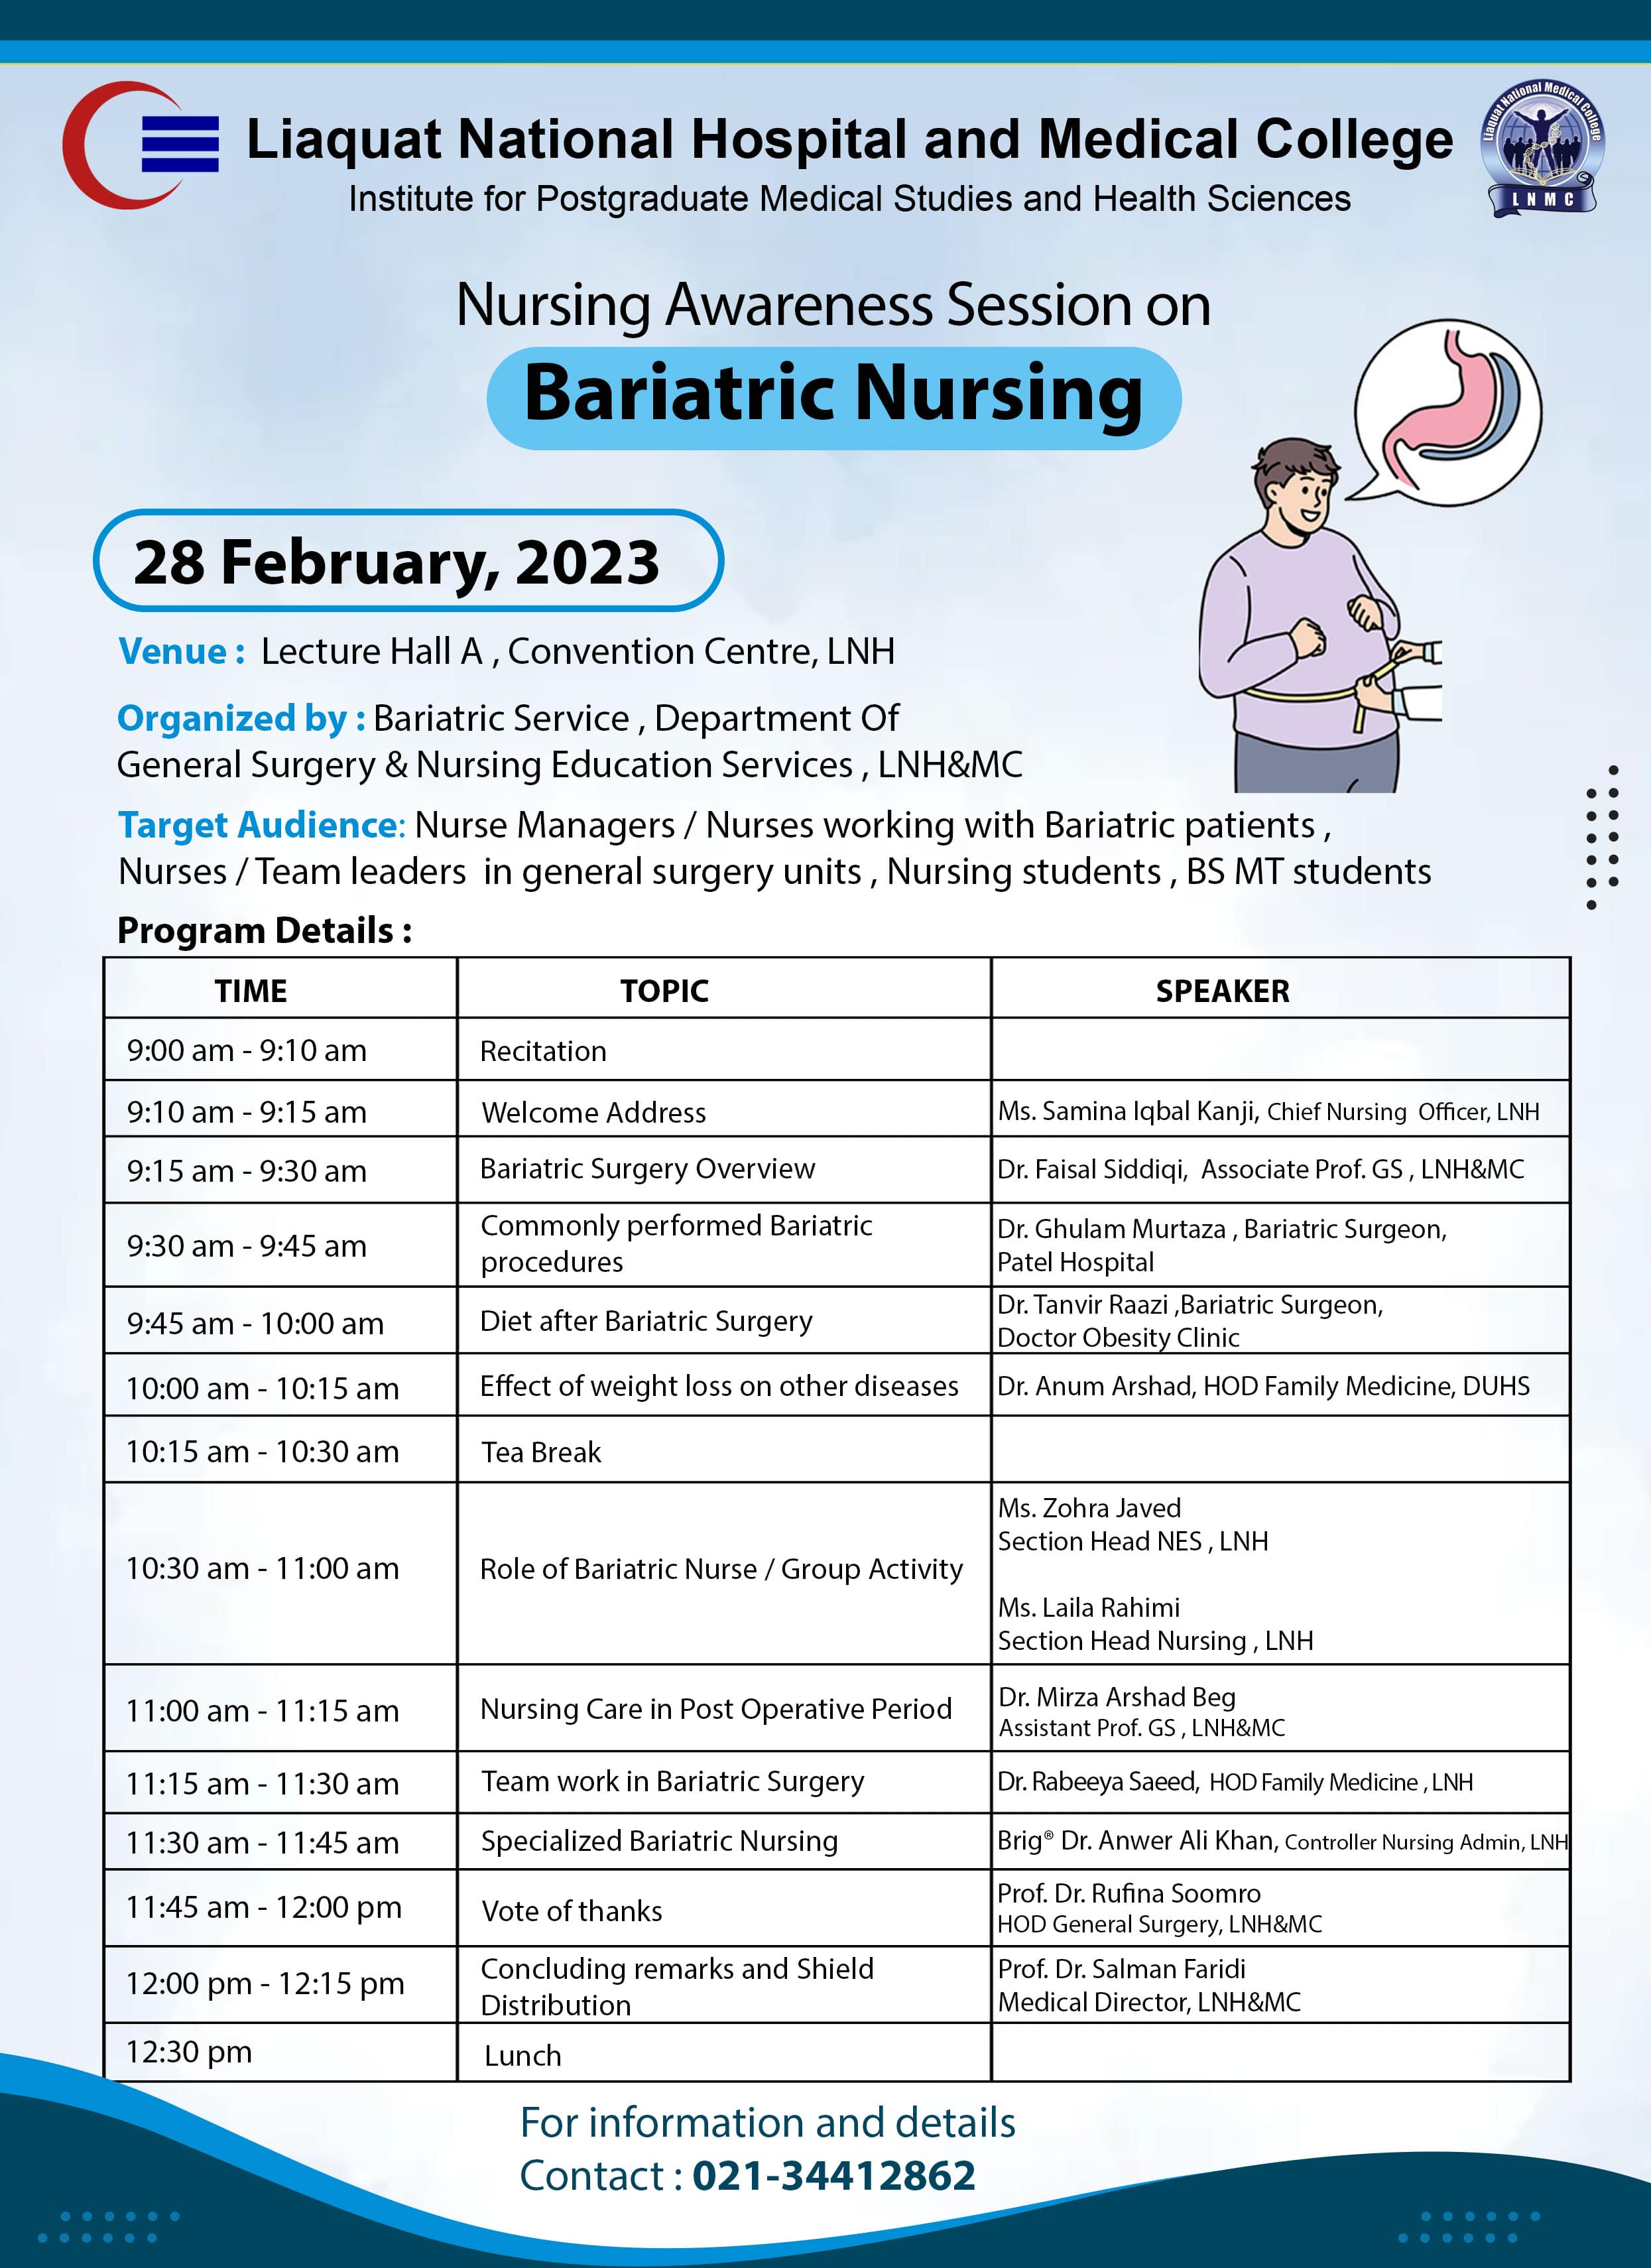 Nursing Awareness Session on Bariatric Nursing